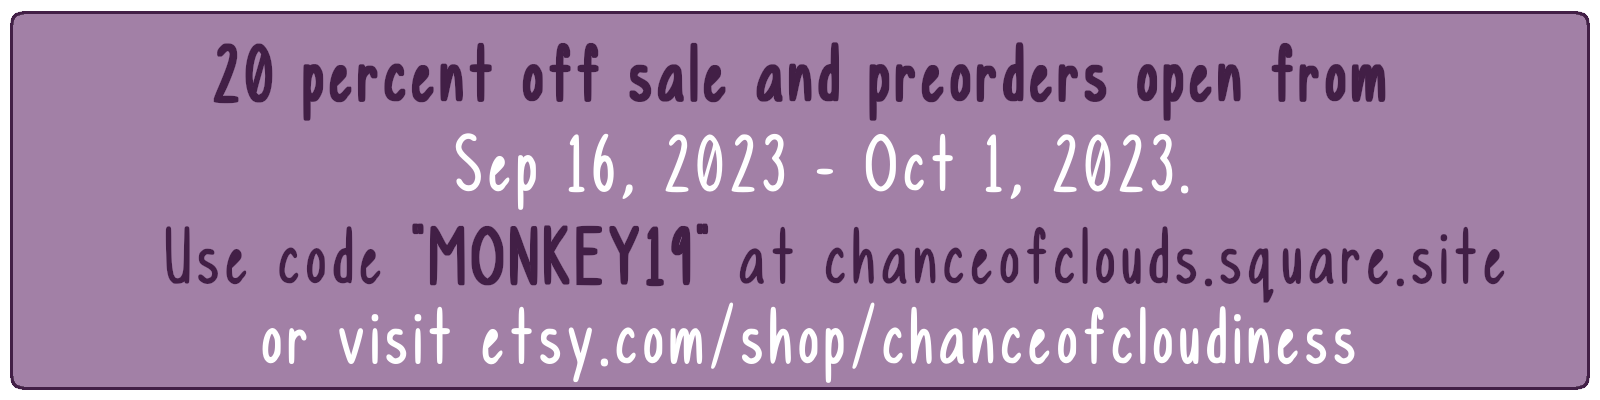 Sep 16 - Oct 1 2023 Sale!